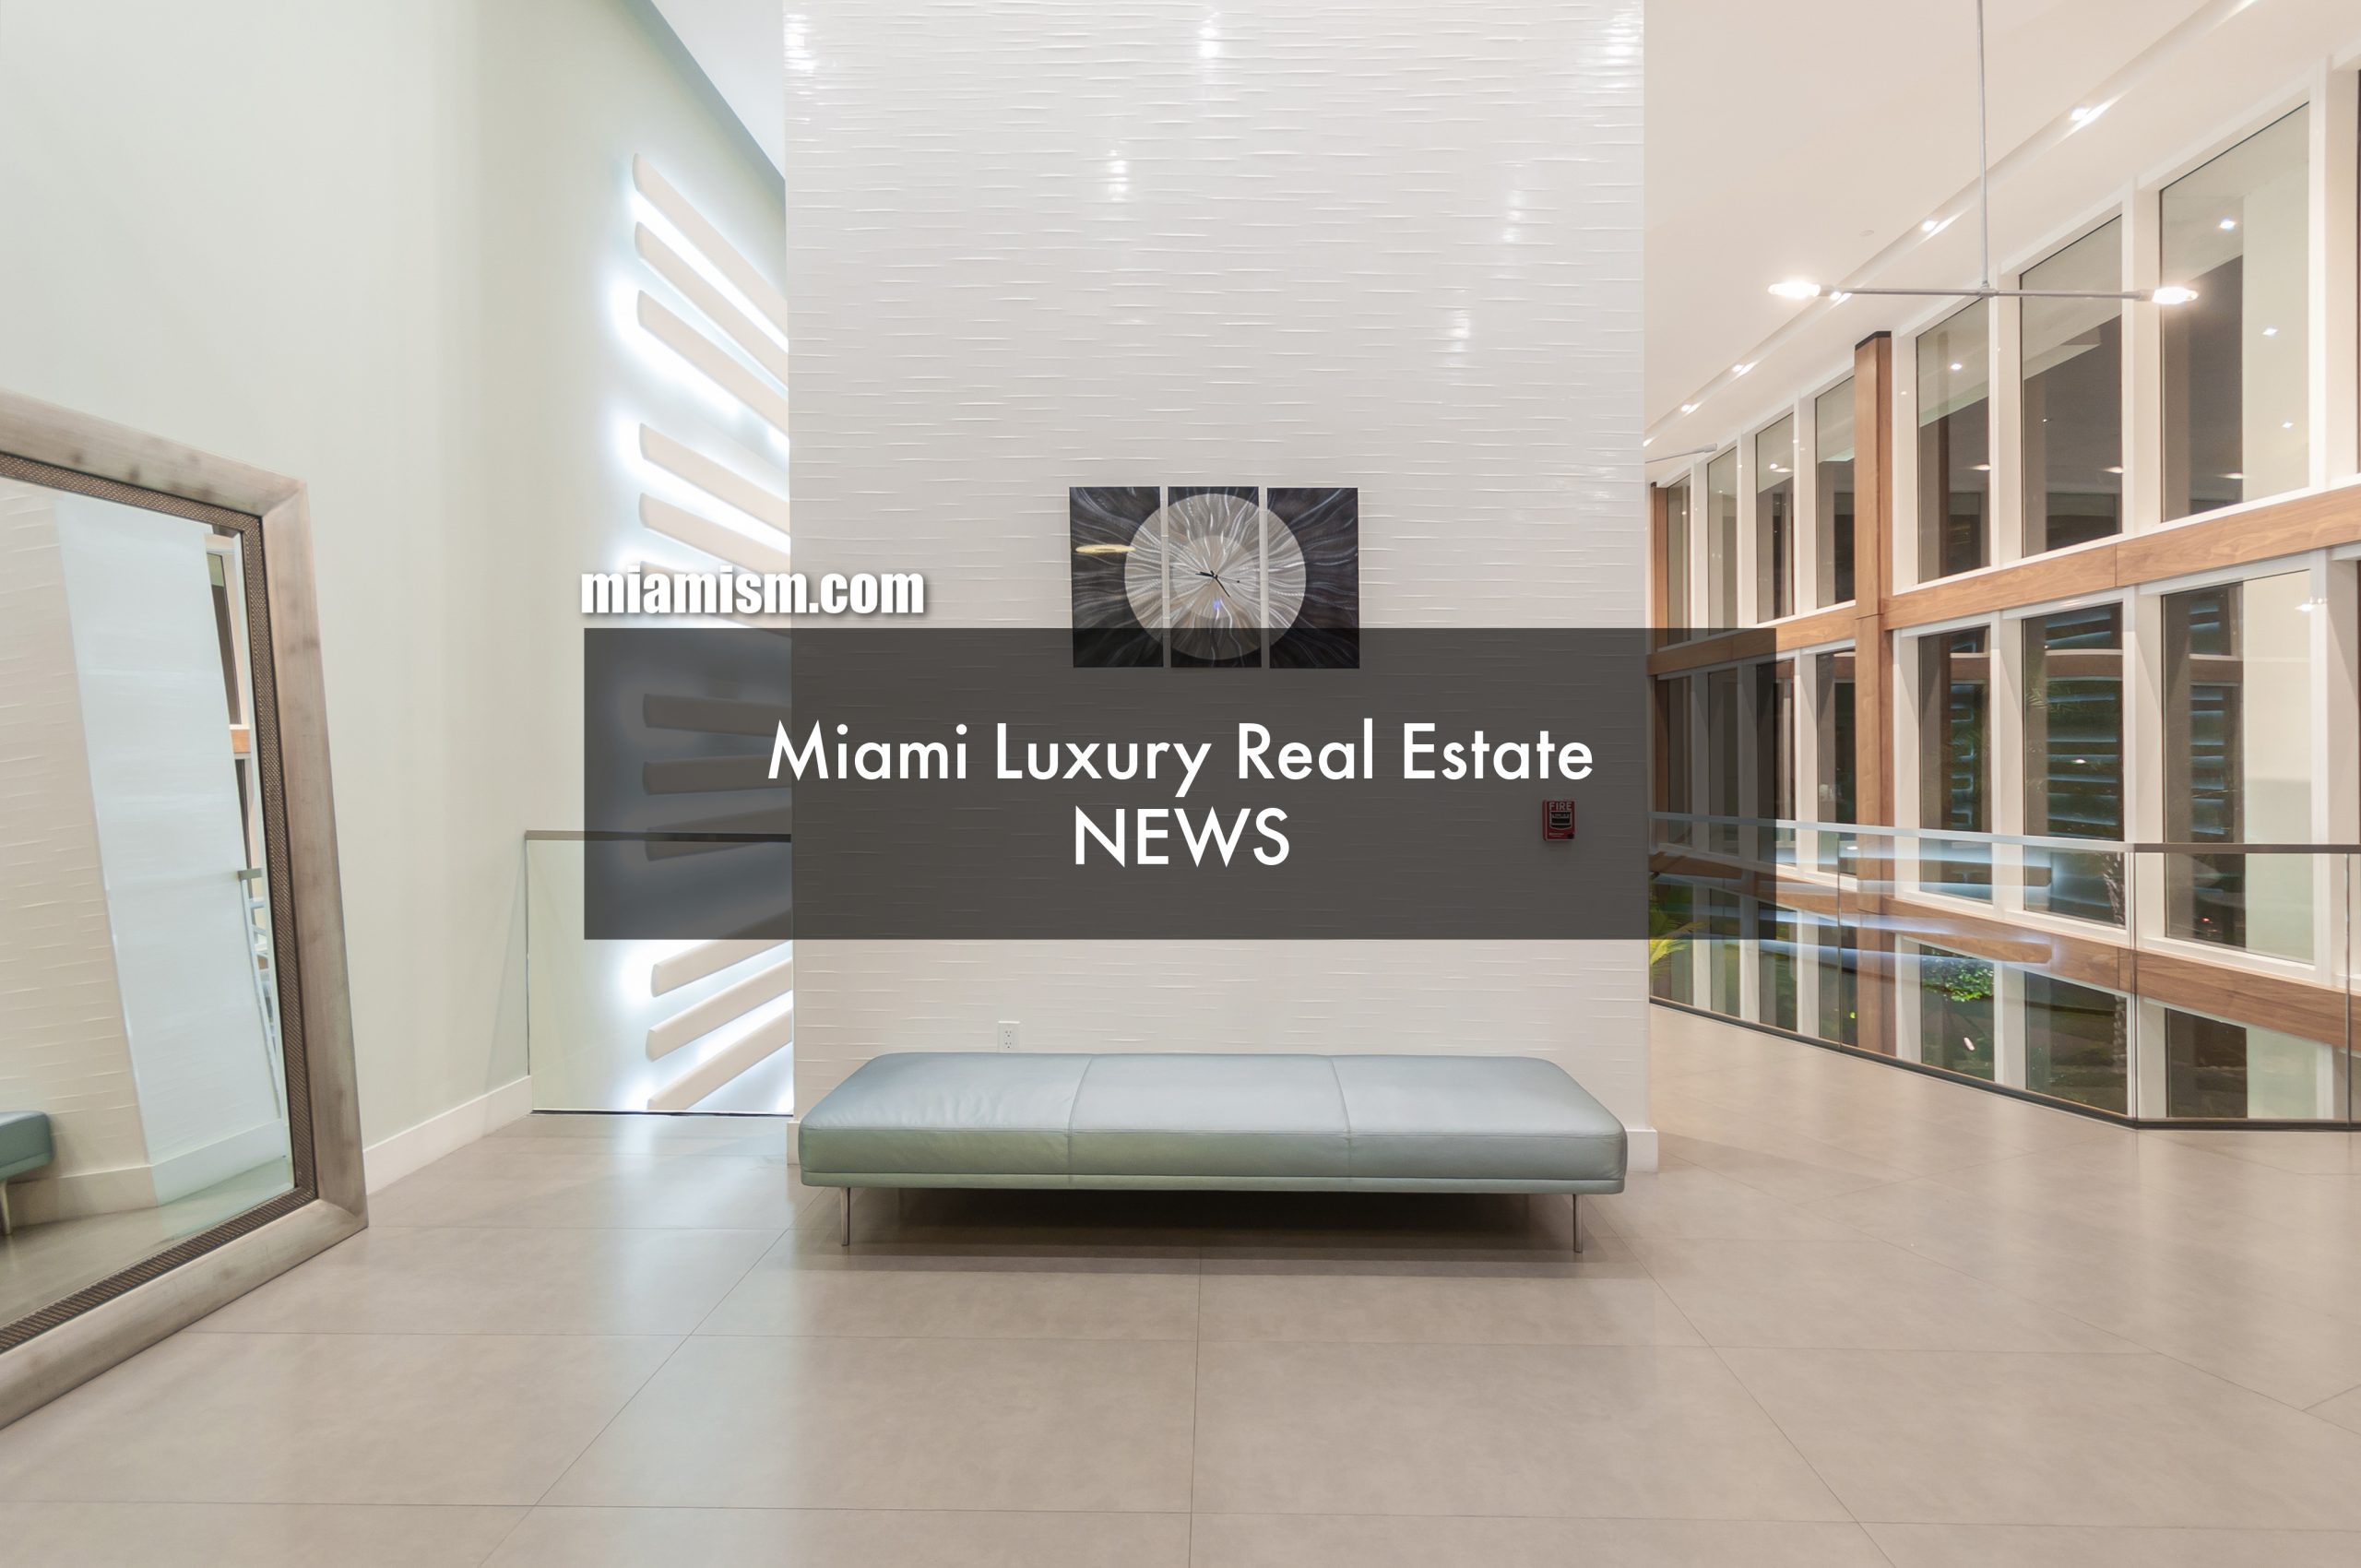 Miami Luxury Realtors Miamism